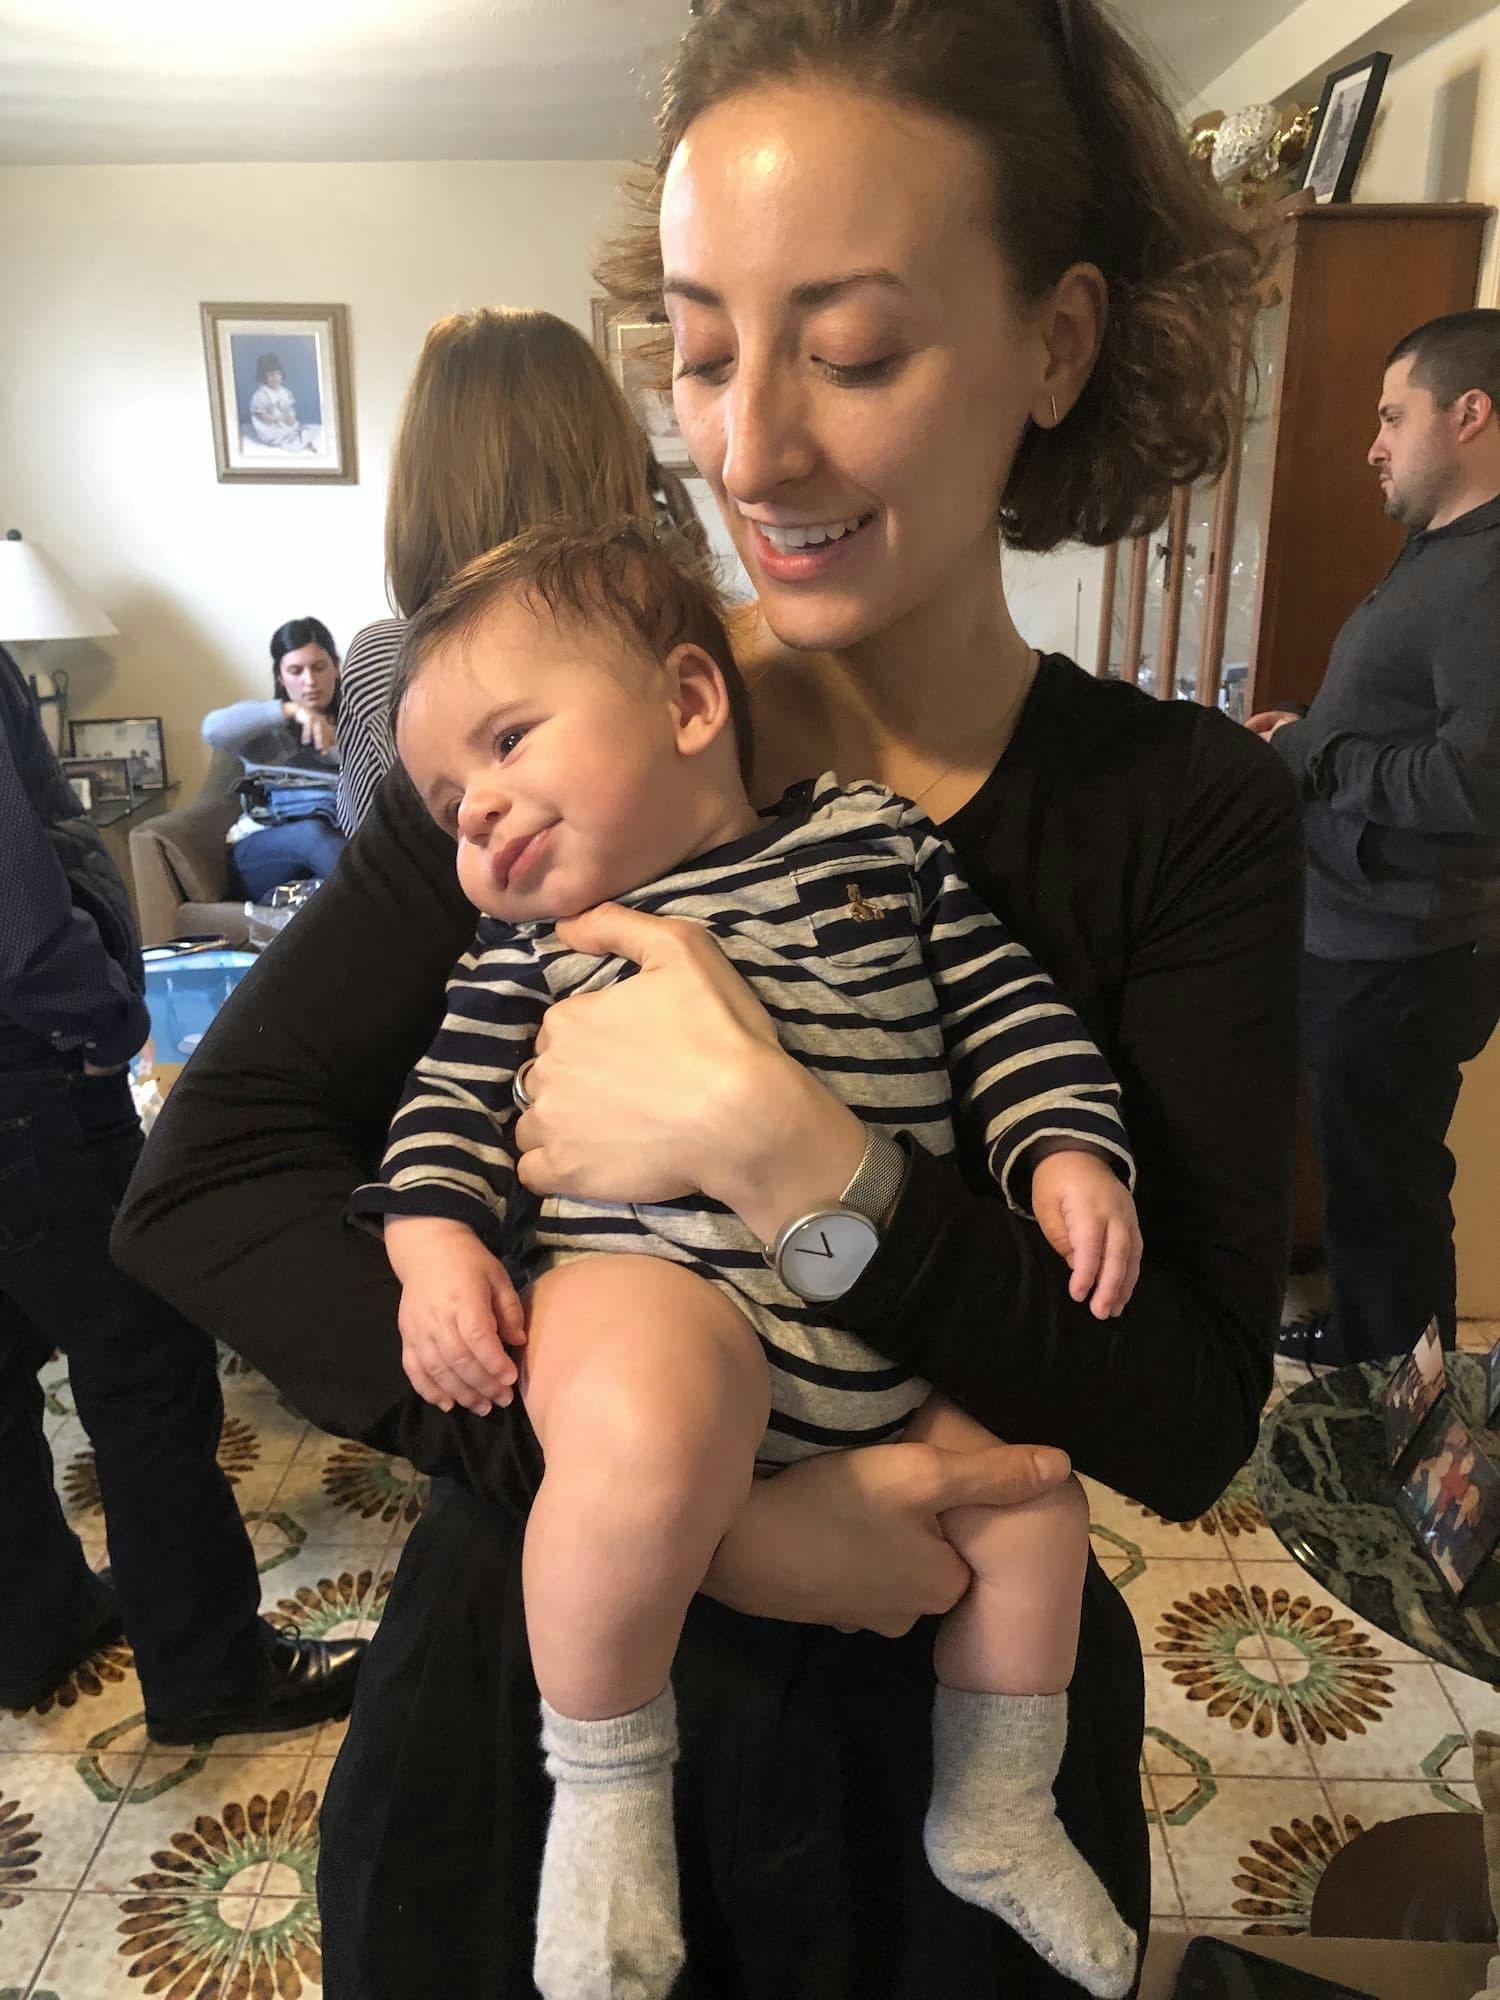 Alessia holding her cousin's son, Giacomo